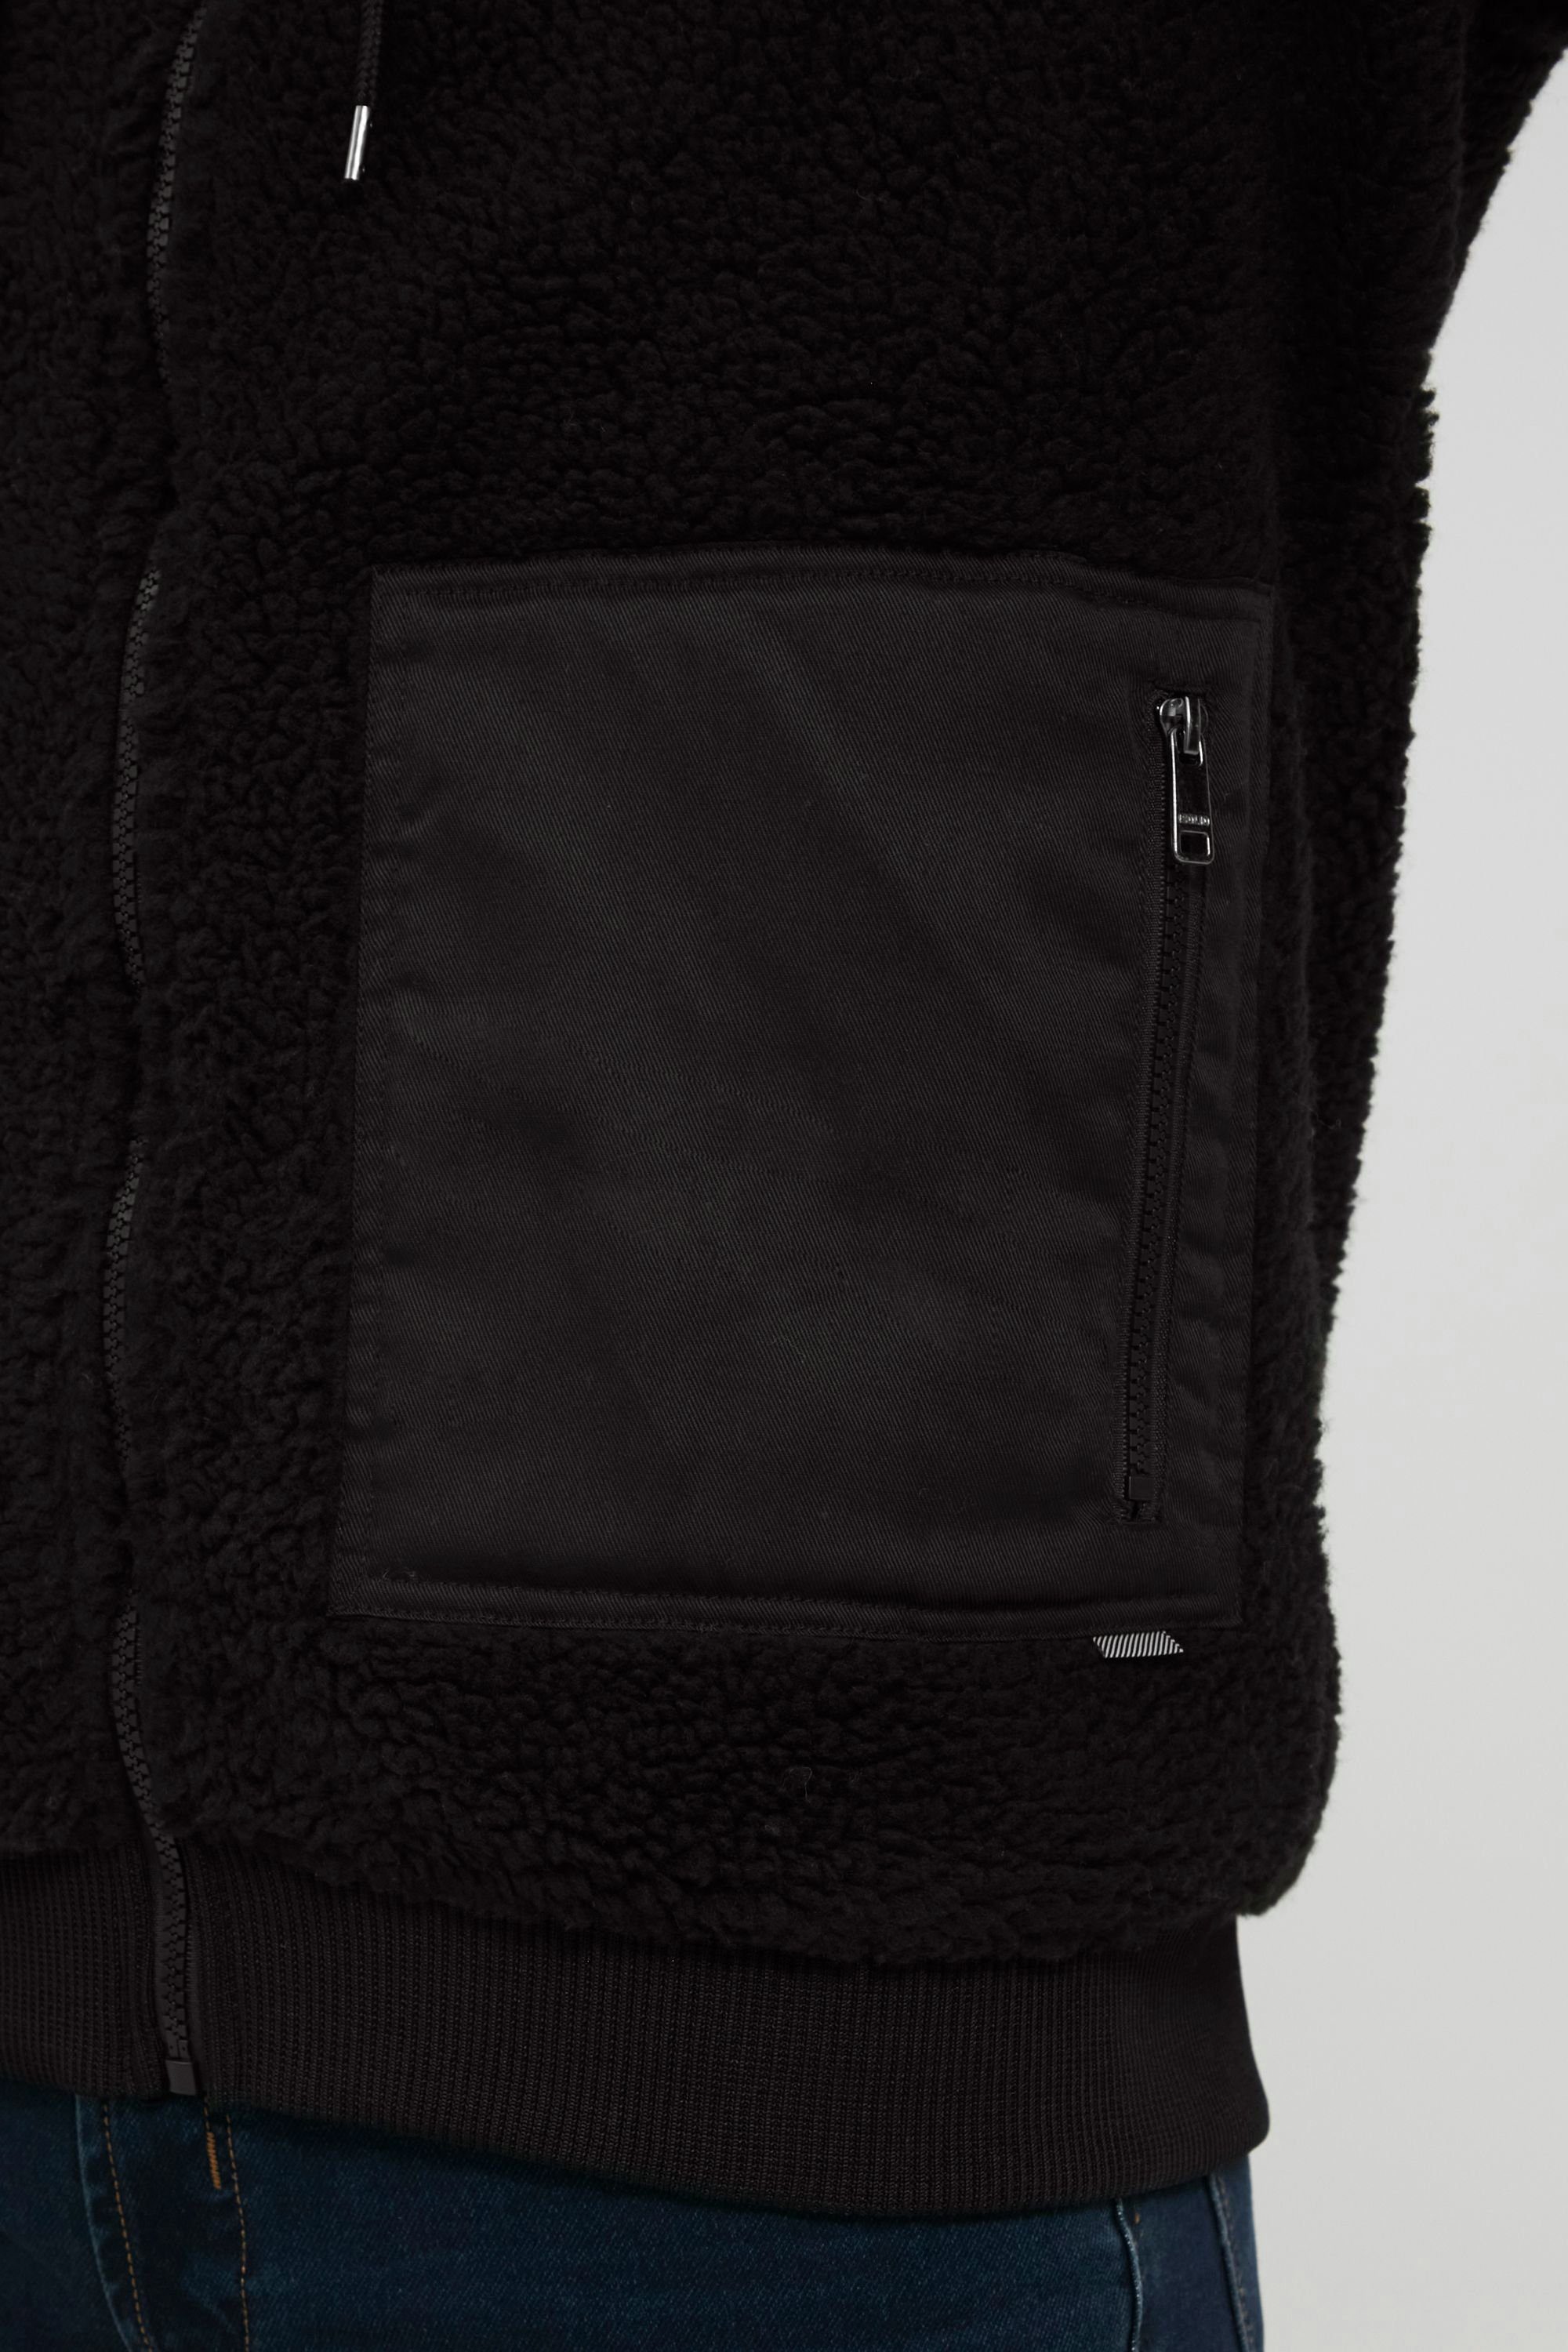 Kapuzenjacken mit hooded (194007) 21106232 BLACK Teddyfell !Solid jacket Fellimitatjacke SDVig